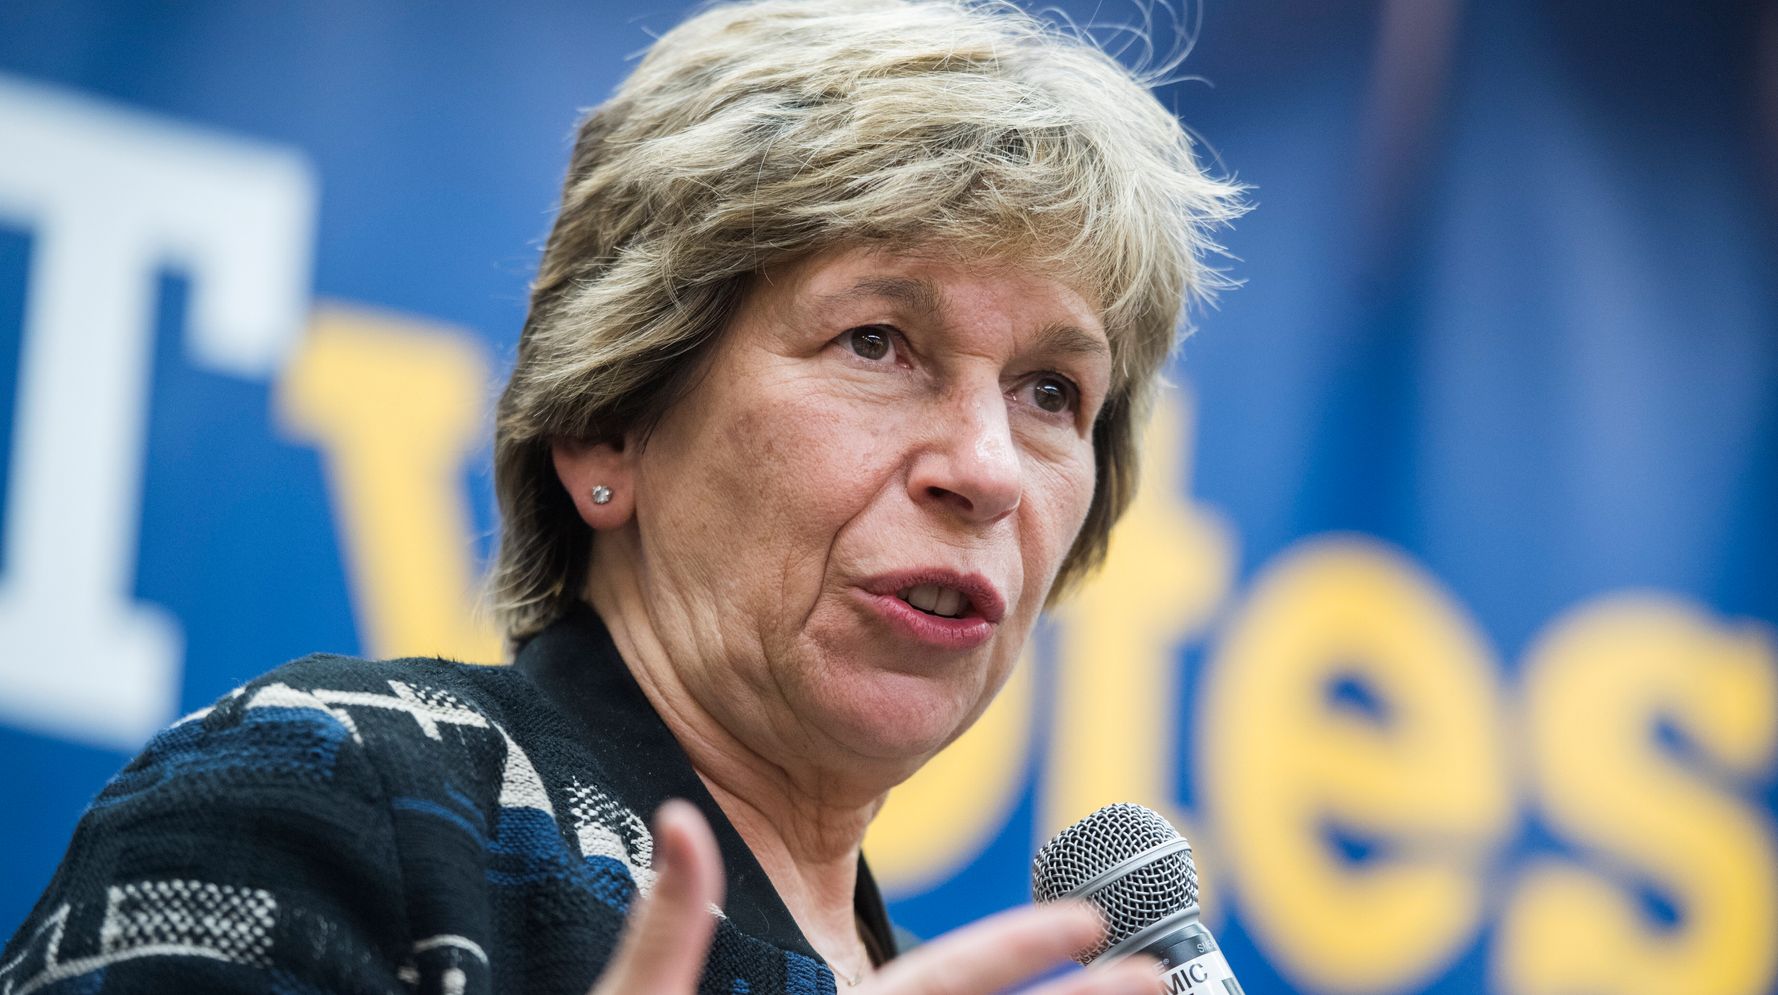 Teachers Union President Says She Supports Vaccine Mandates